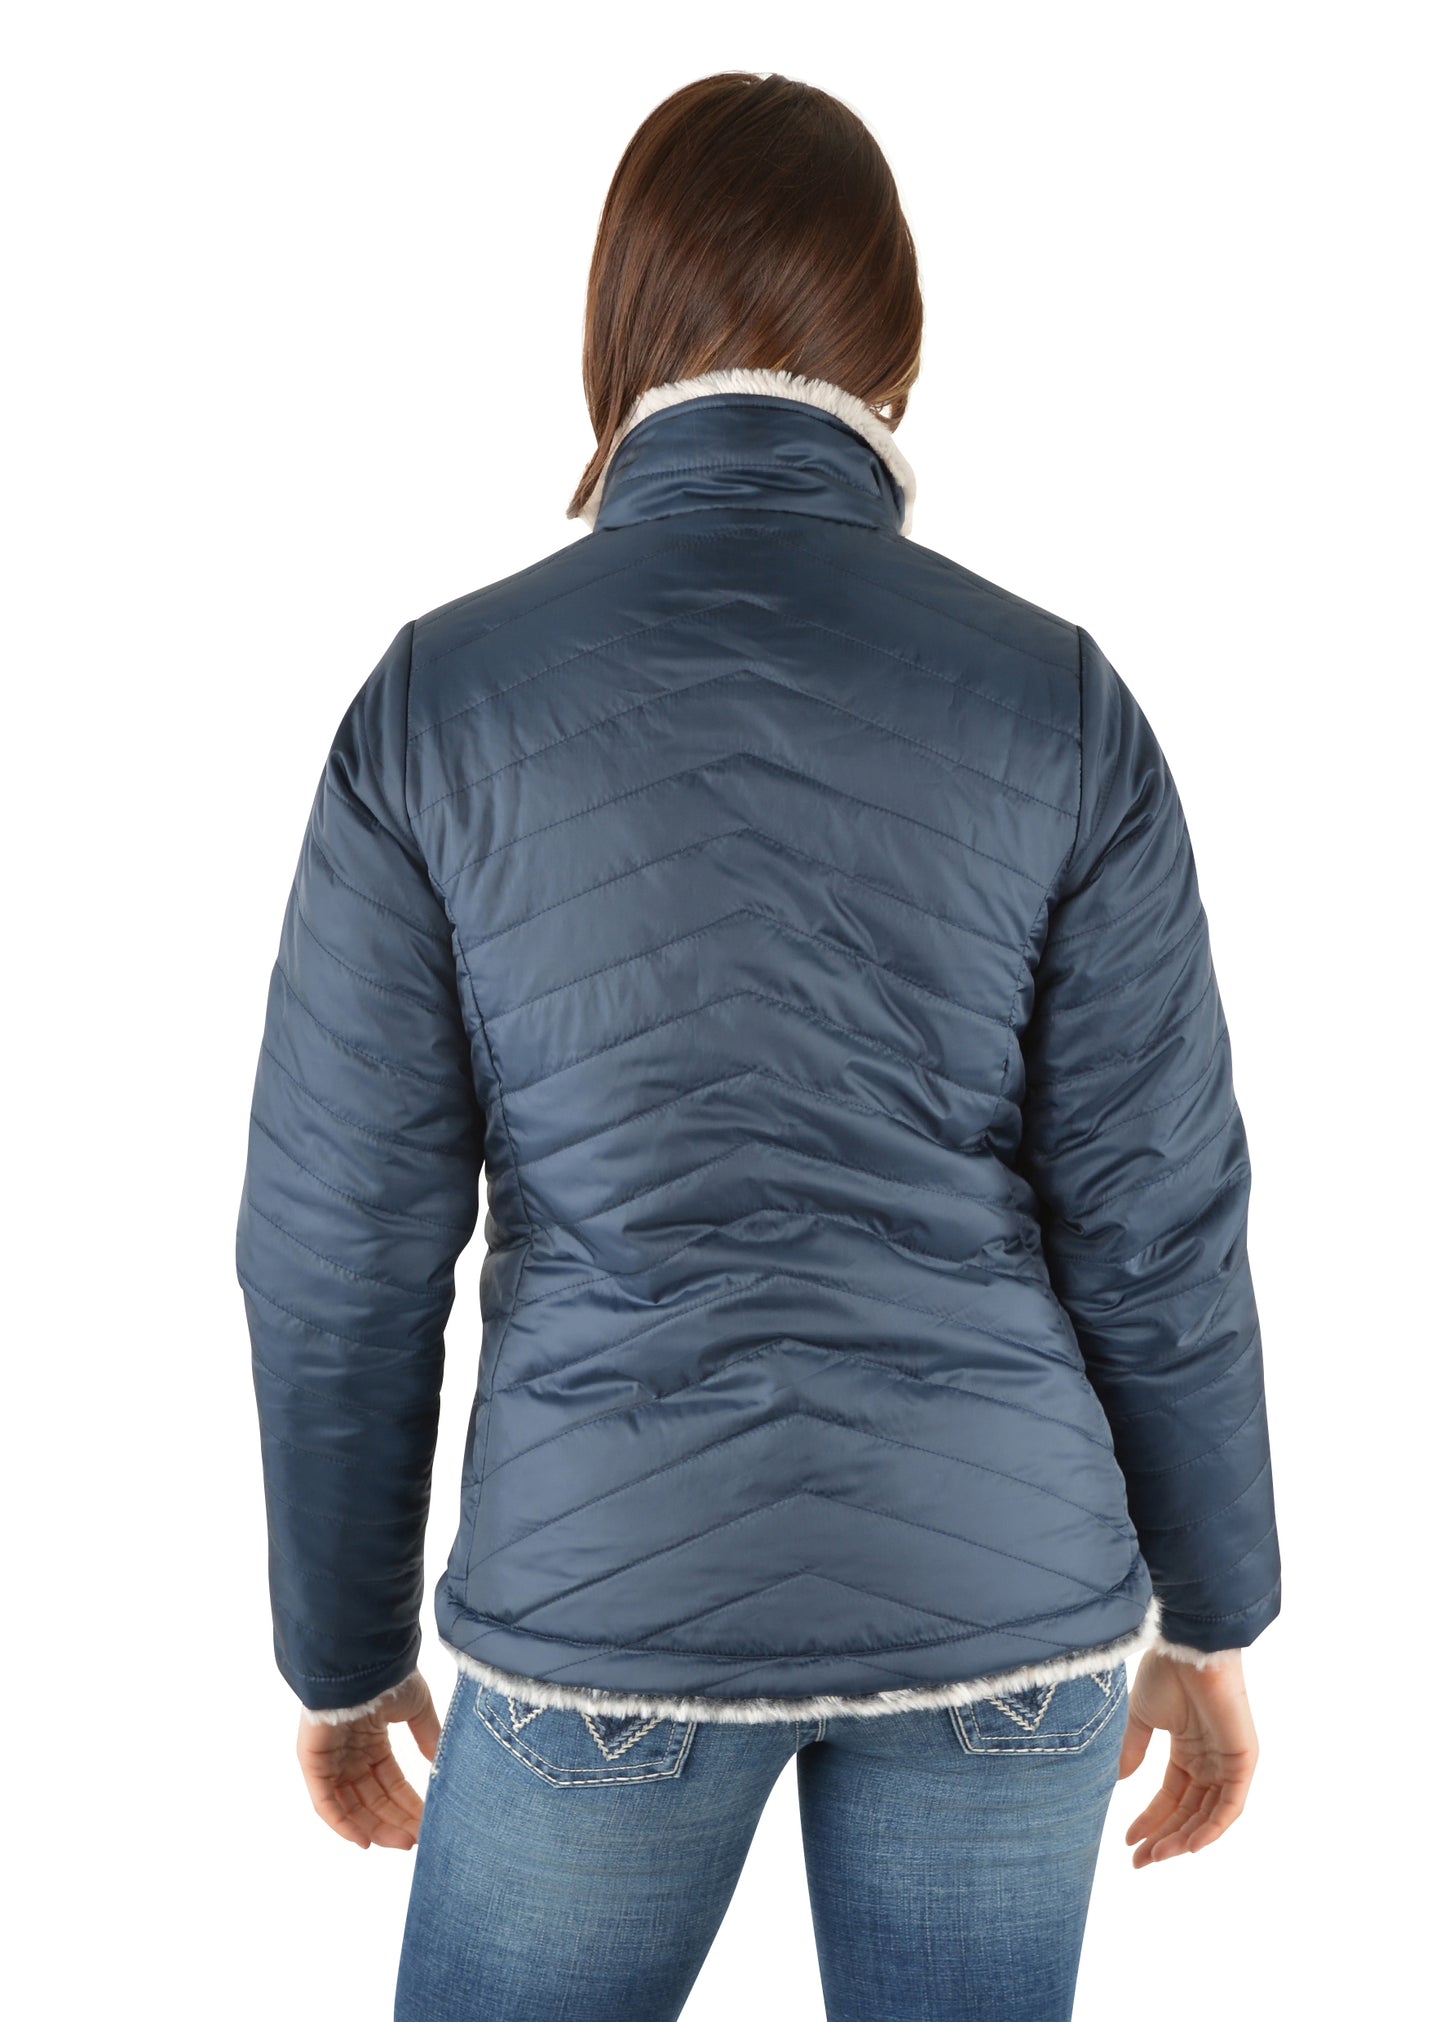 Wrangler Ladies Maya Reversible Jacket - Navy/Grey - X3W2790631